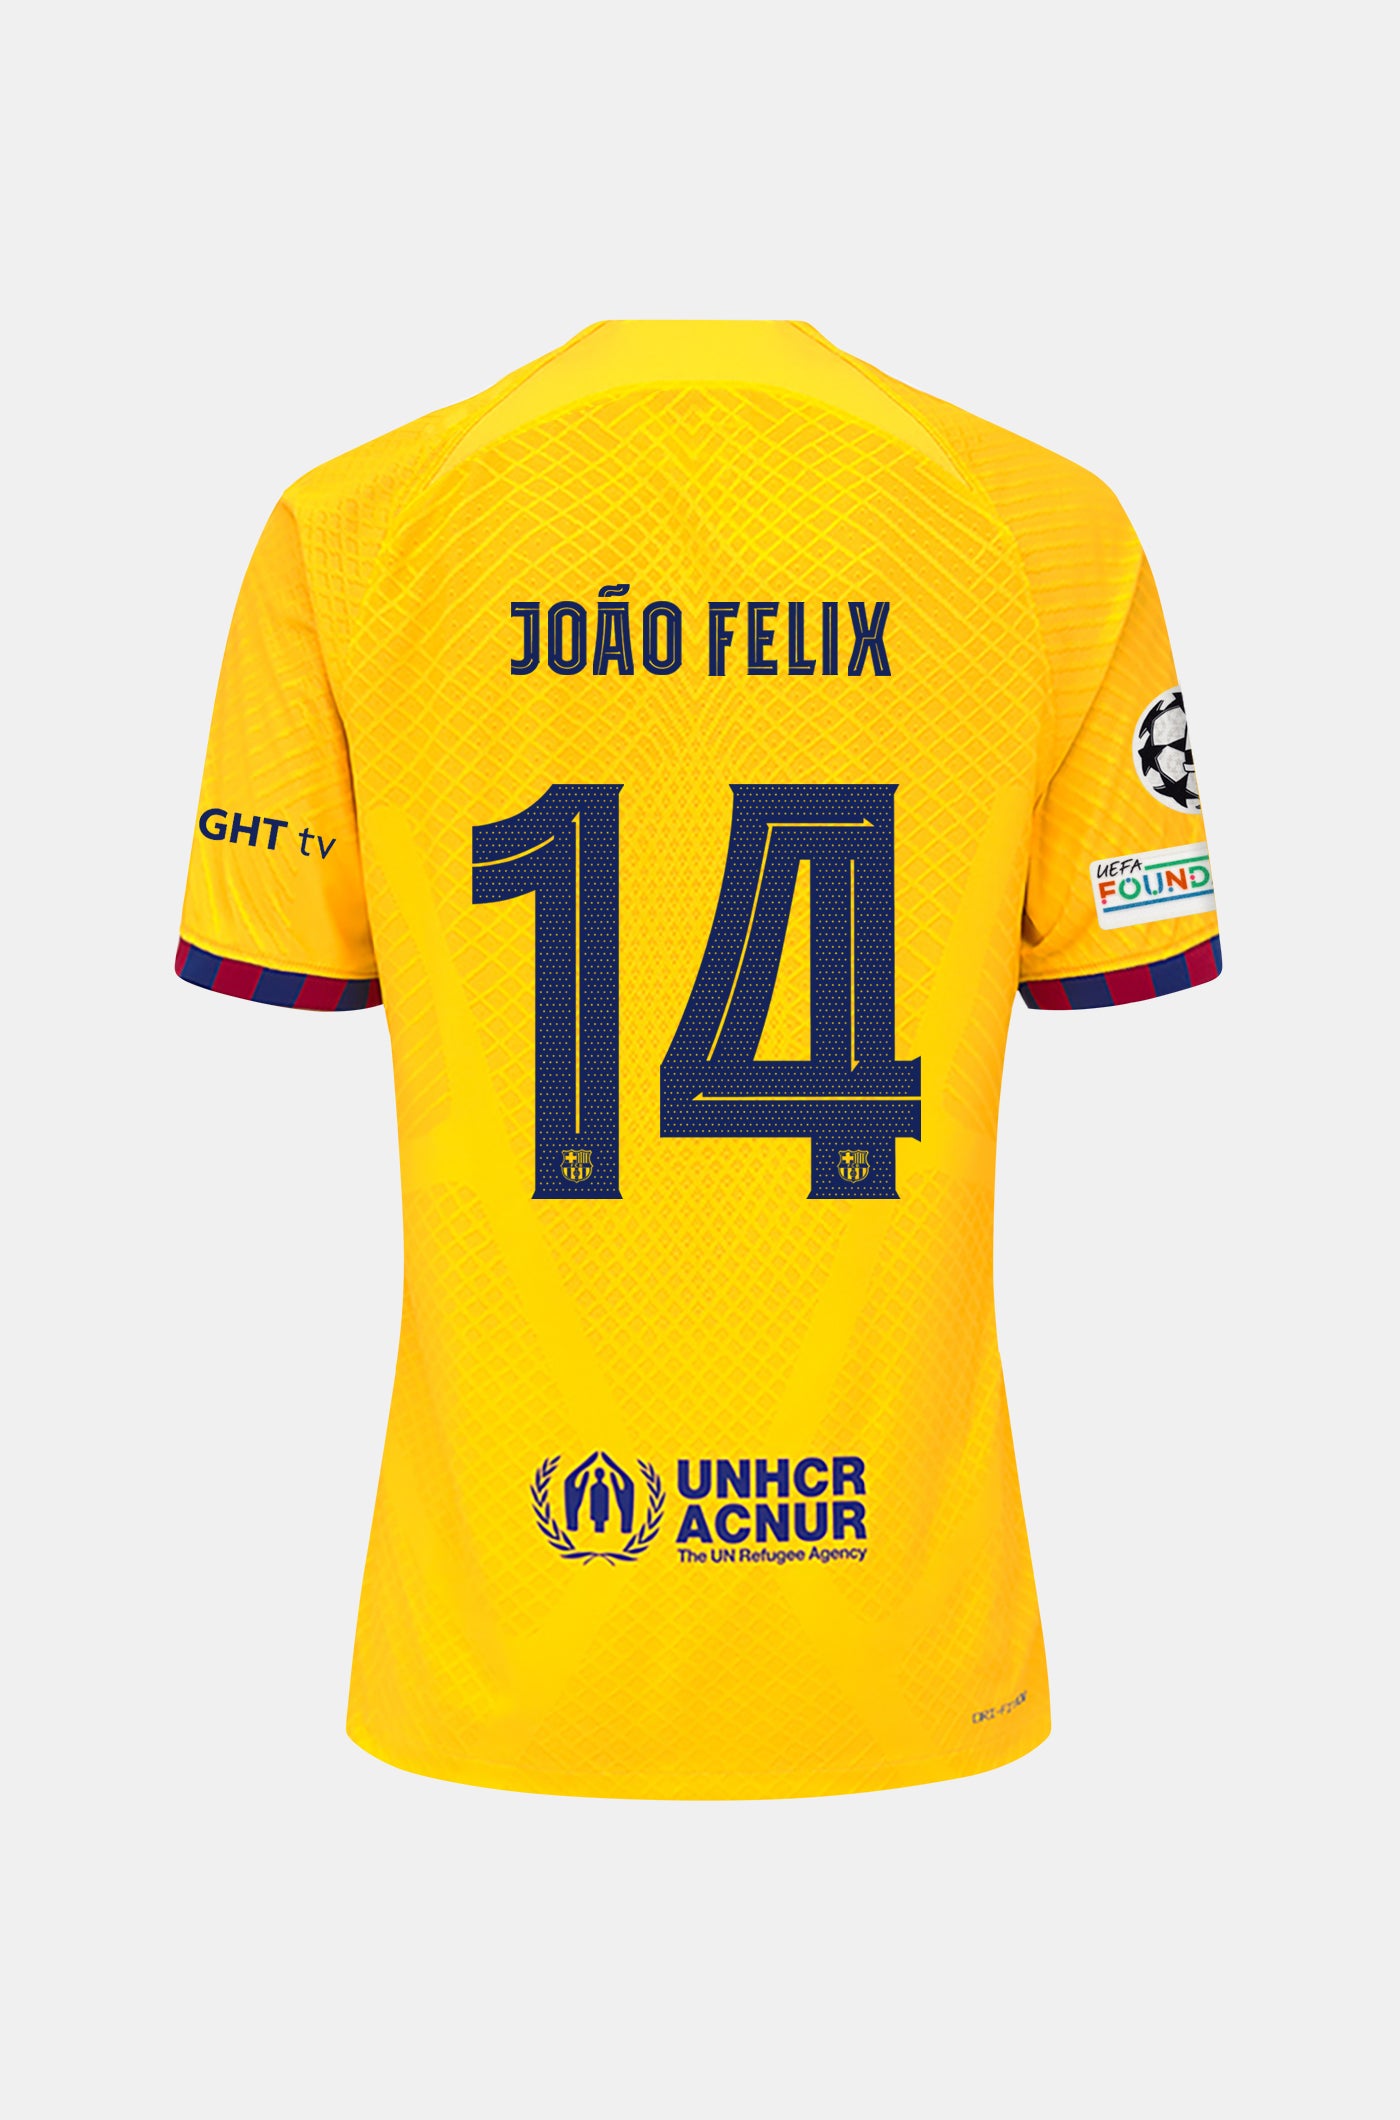 UCL FC Barcelona fourth shirt 23/24 Player’s Edition - JOÃO FELIX